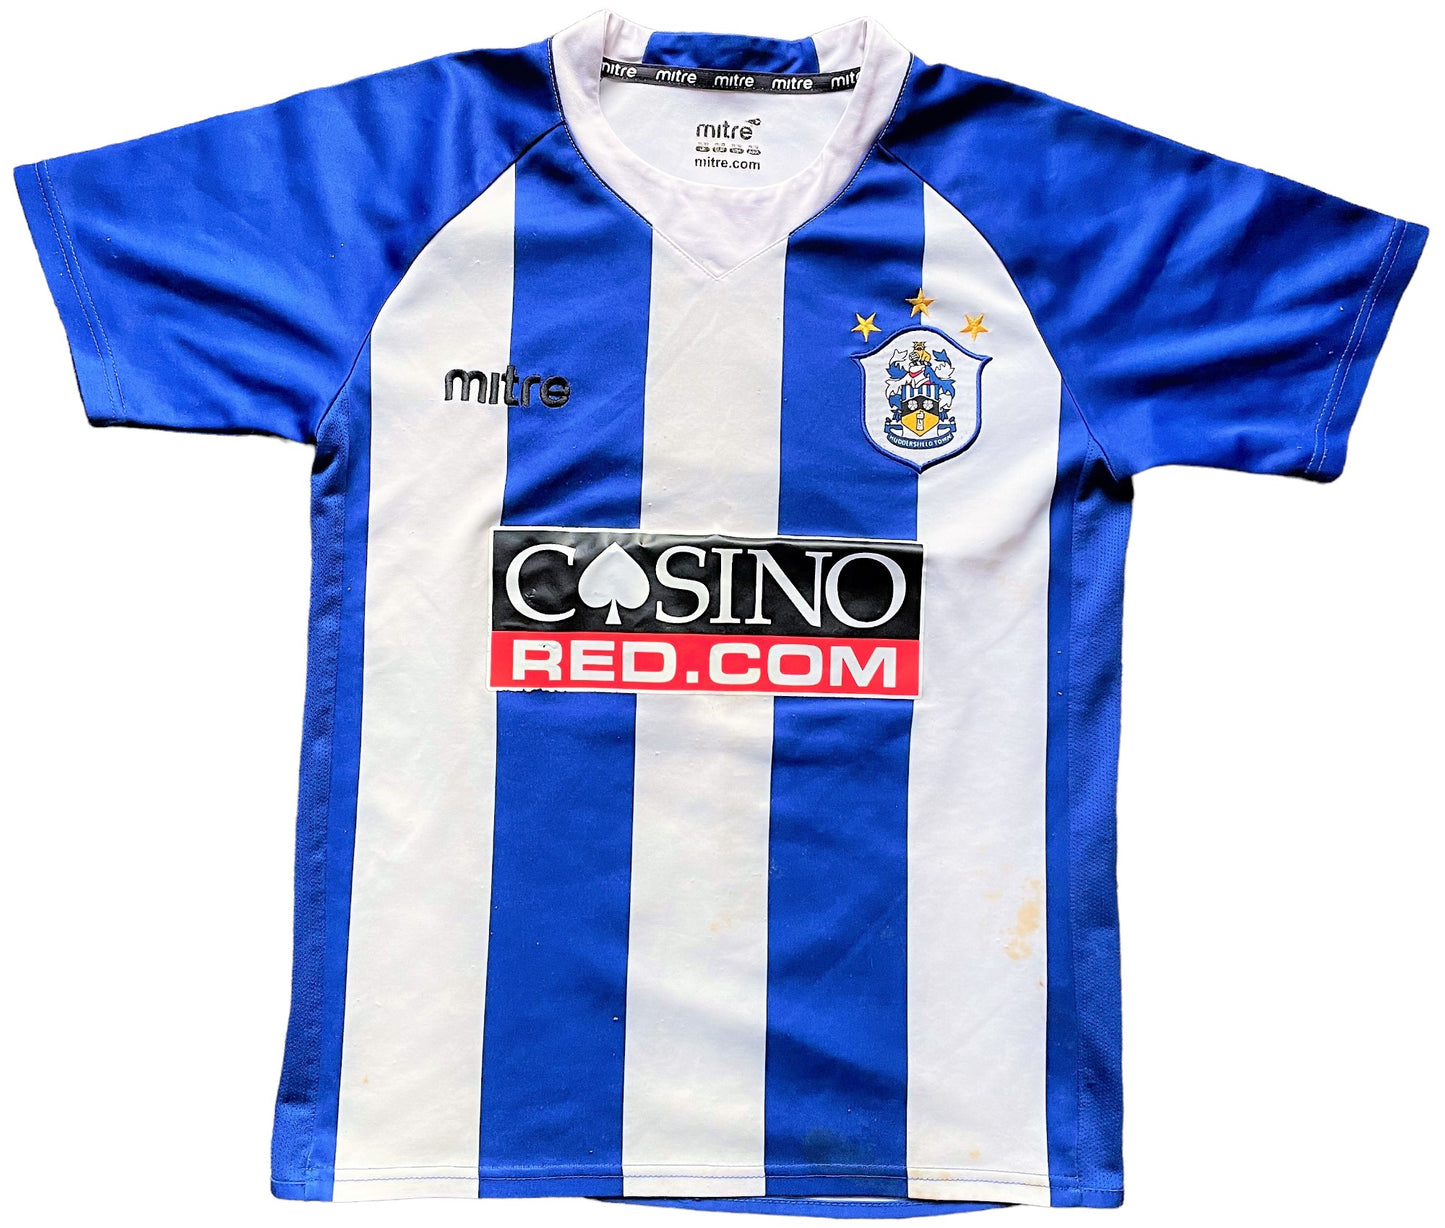 2007-08 Huddersfield Town shirt (average) 11 to 12 years